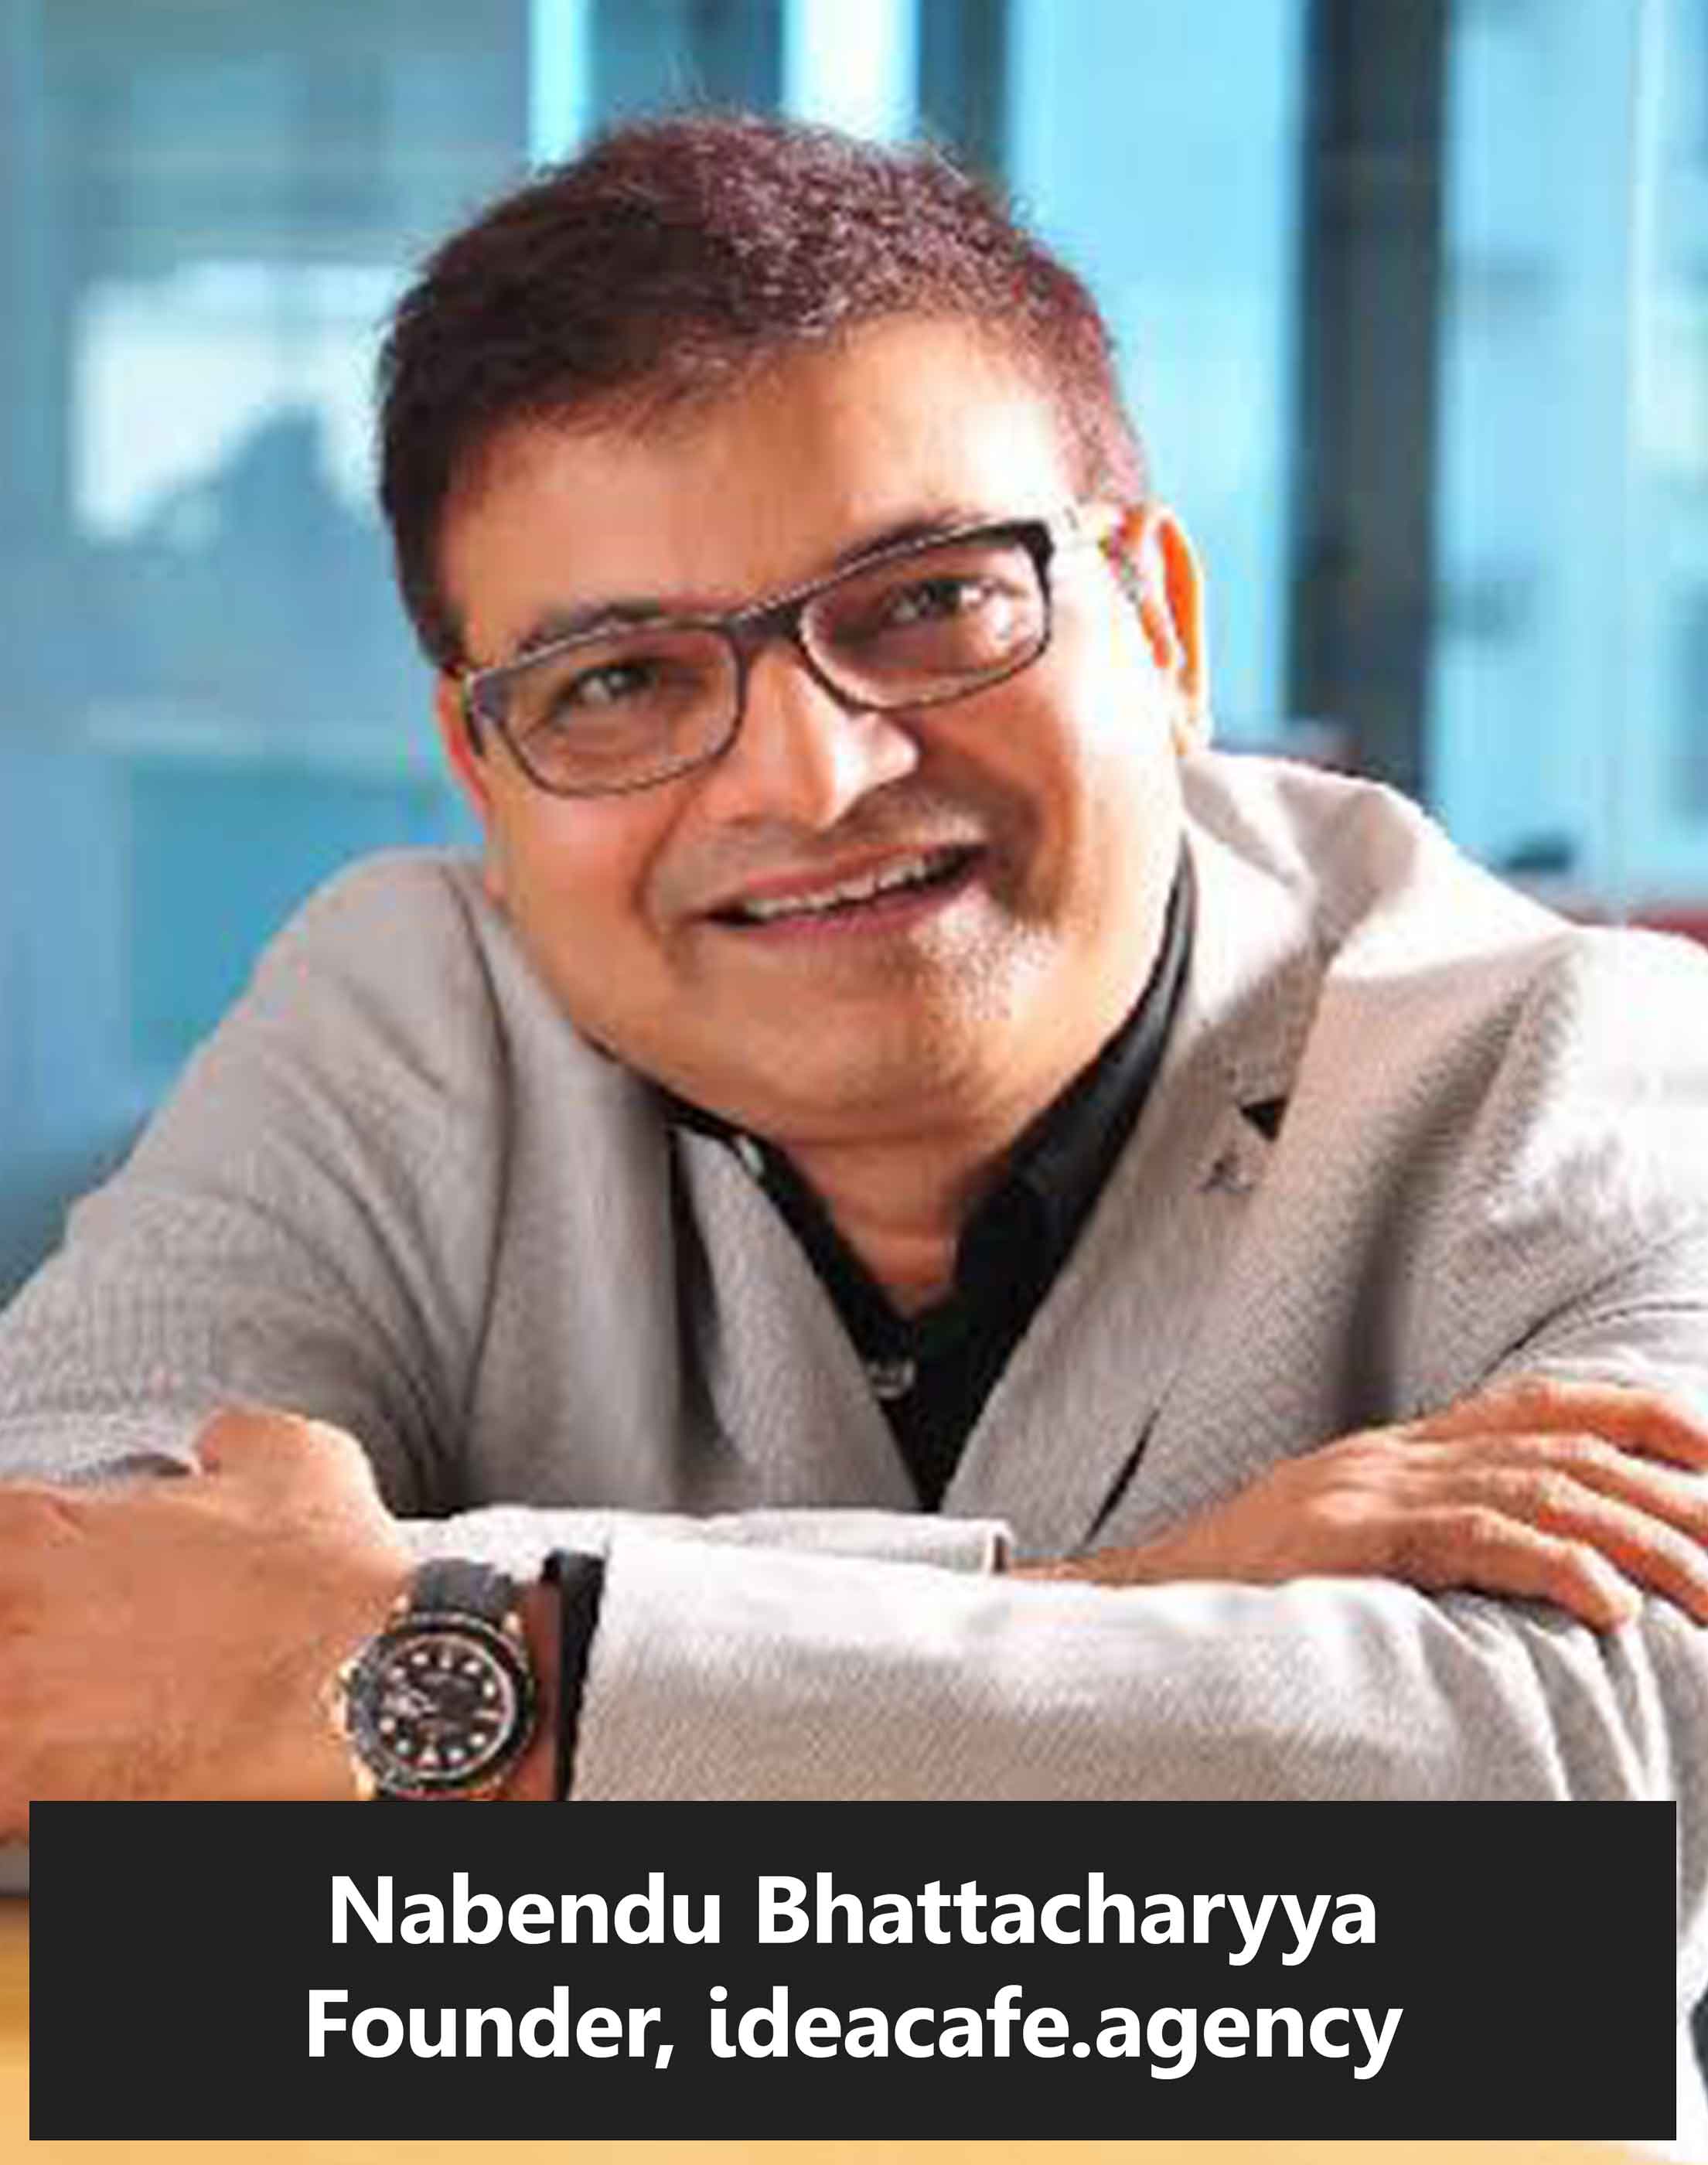 Nabendu Bhattacharyya, Founder of ideacafe.agency